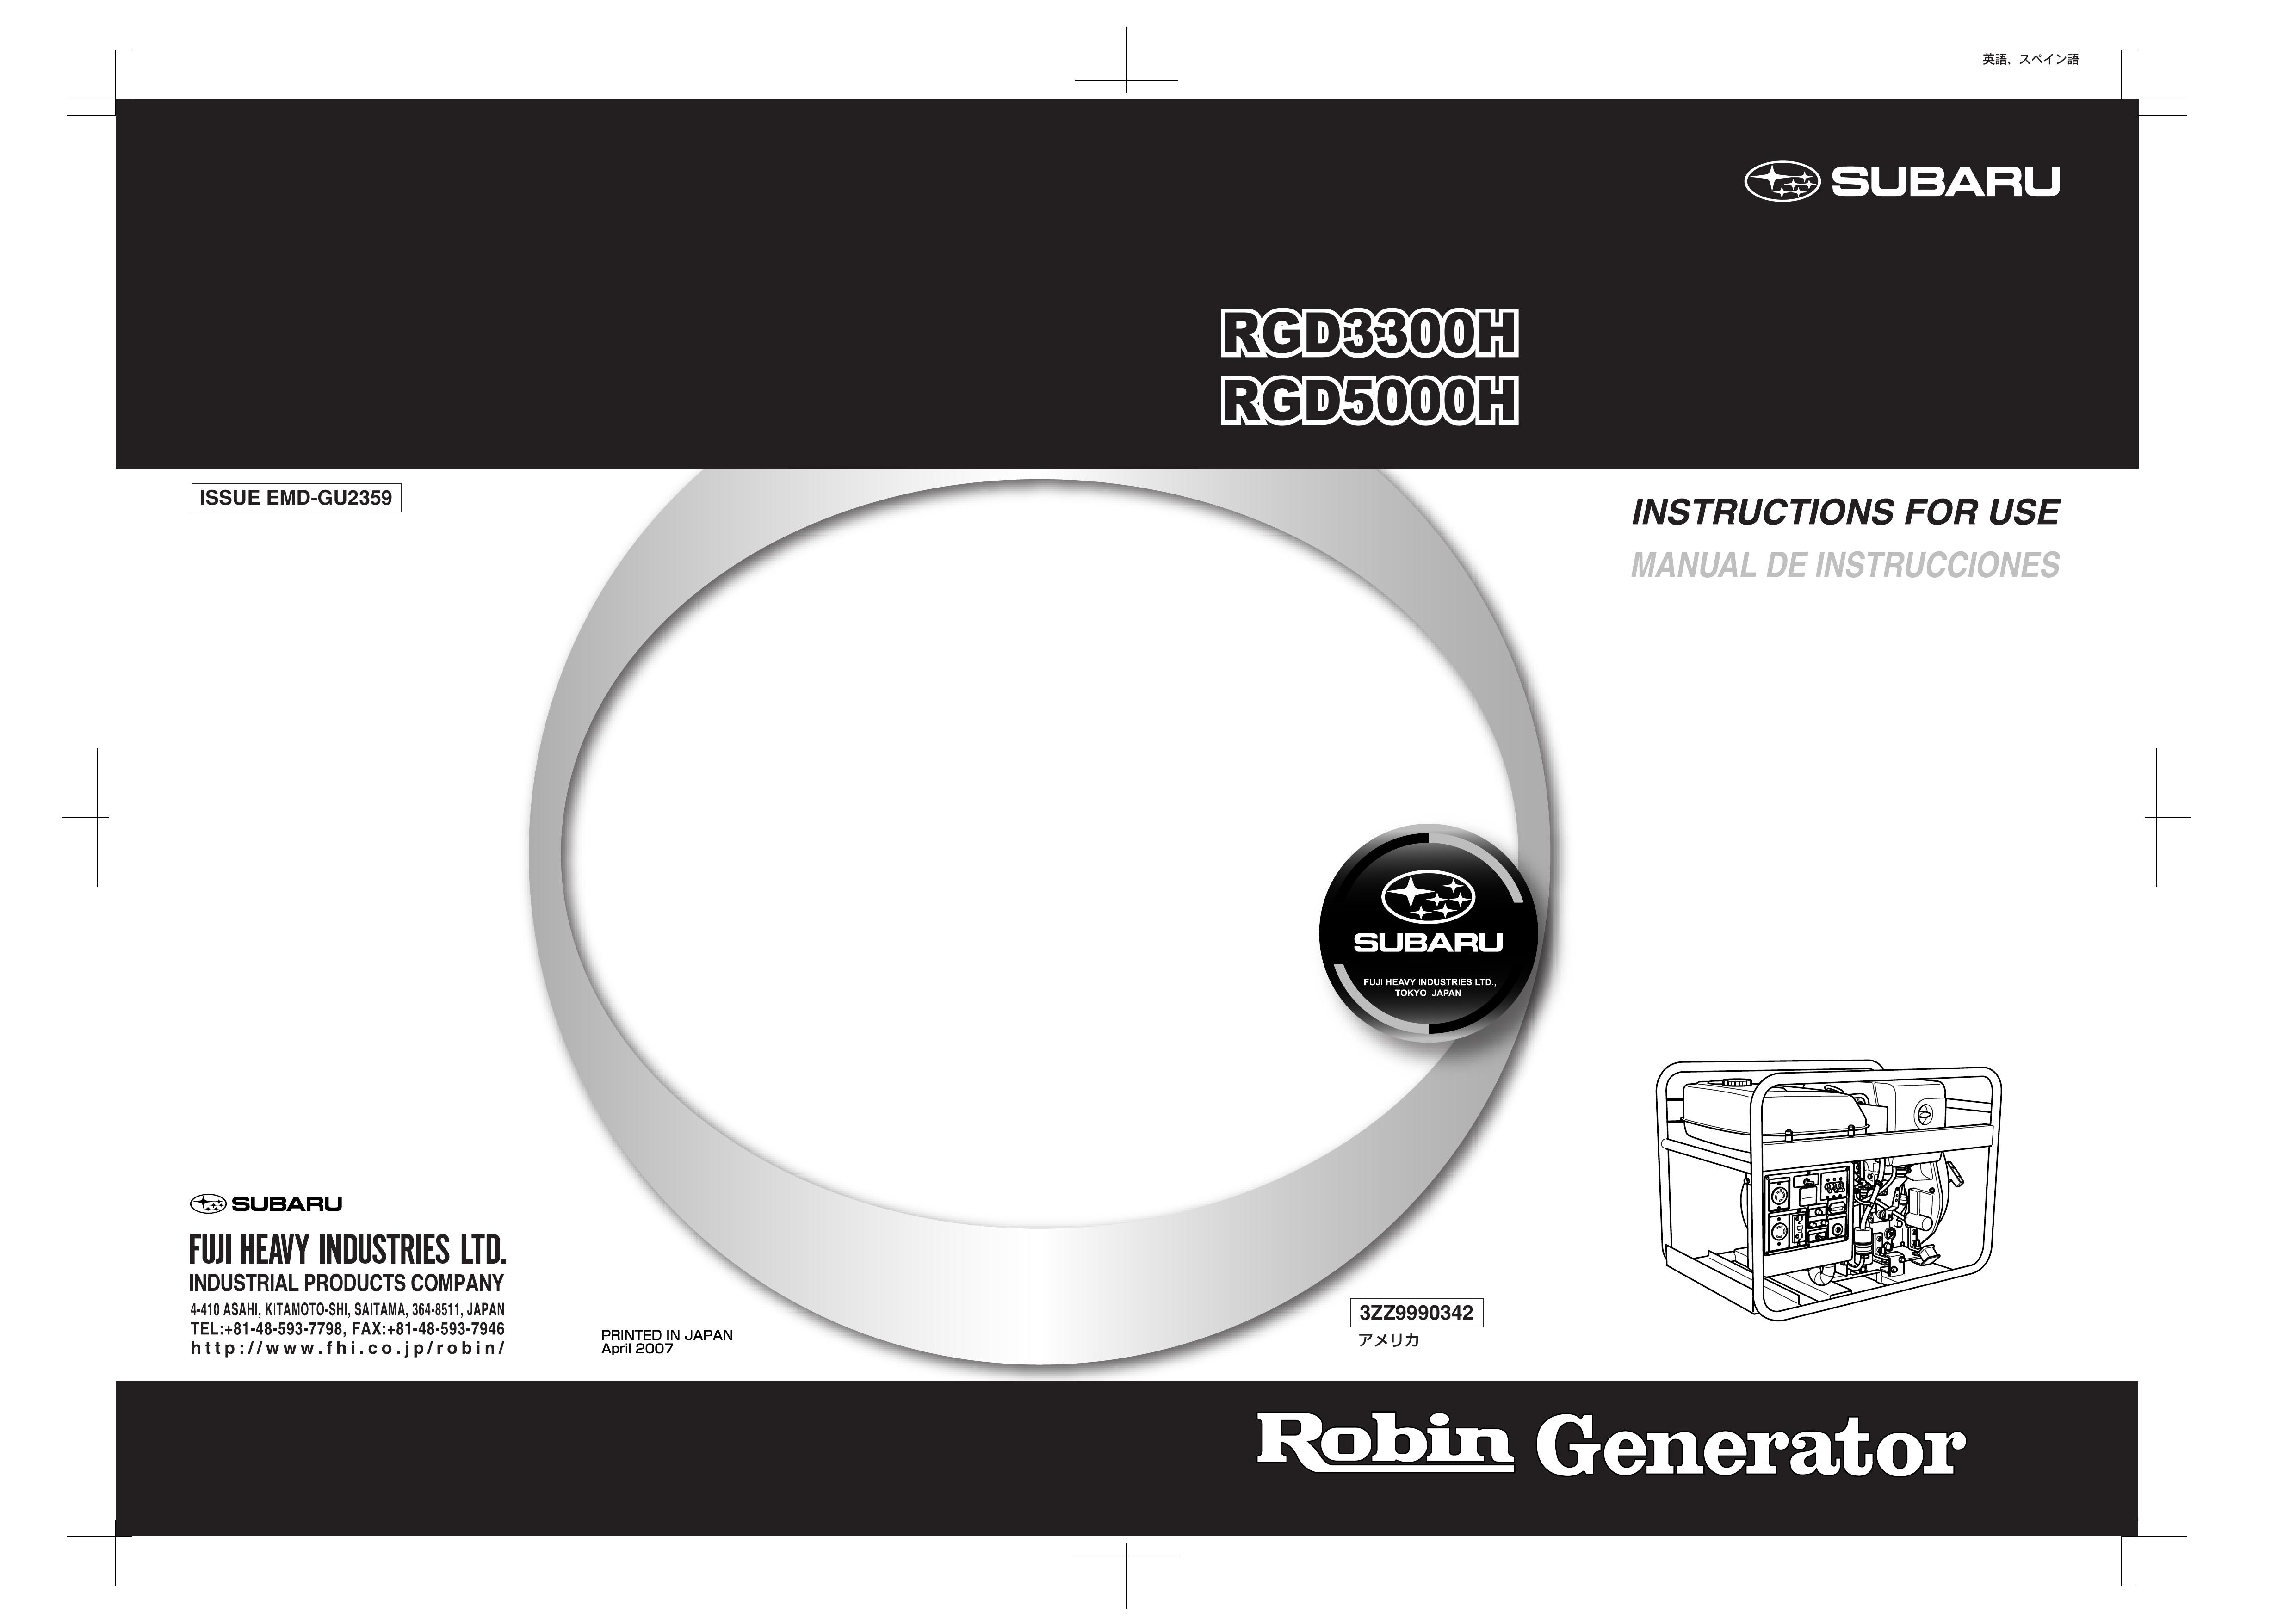 Subaru RGD3300H Portable Generator User Manual